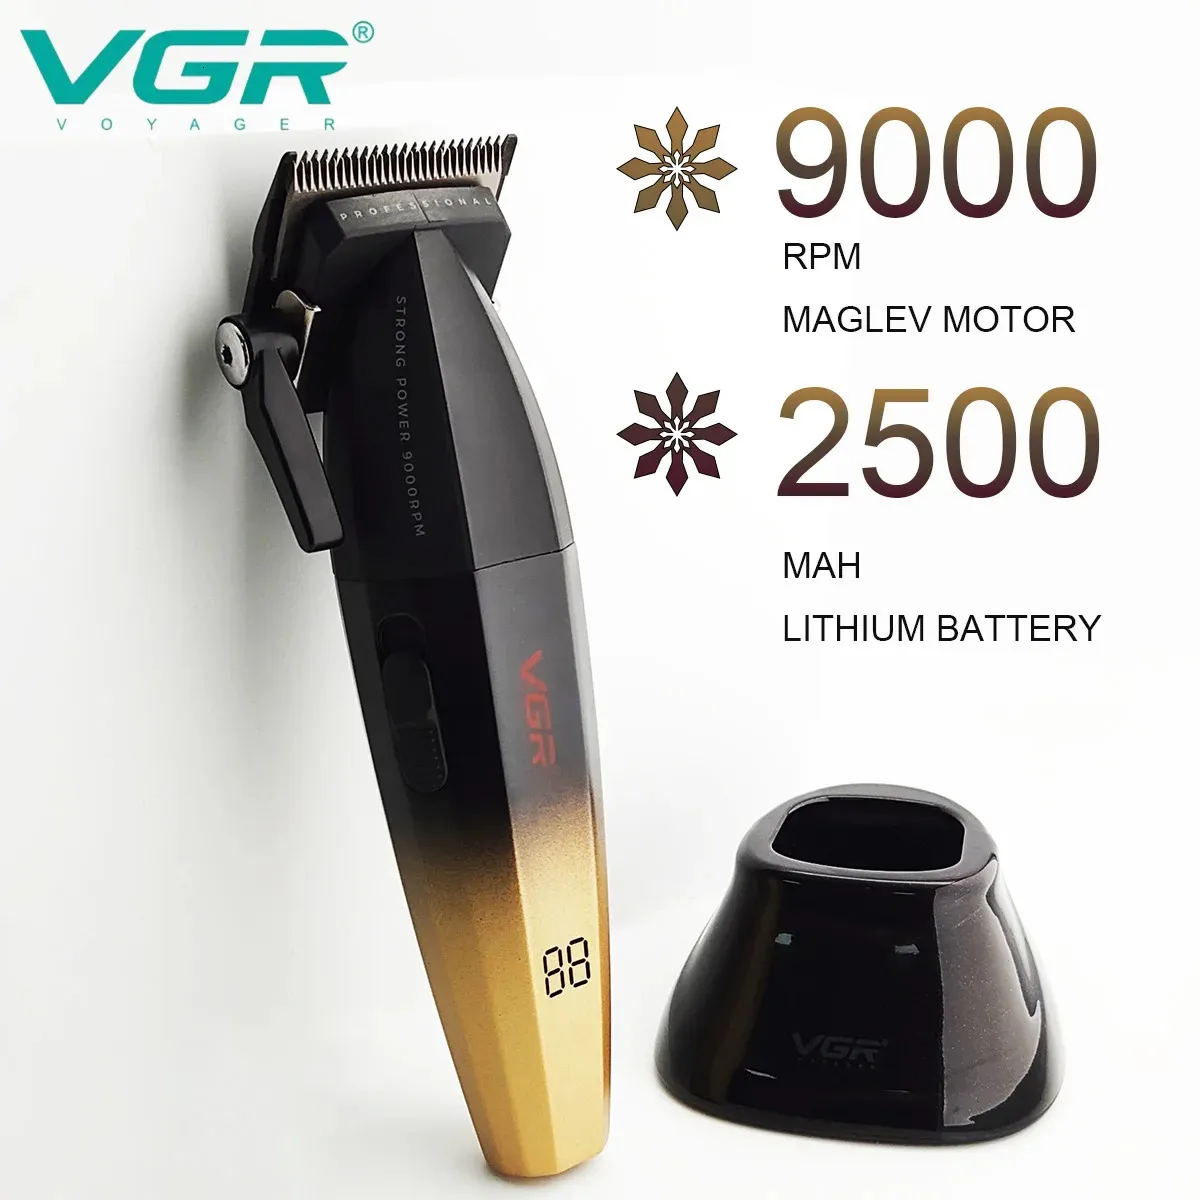 VGR cortadora de pelo profesional para hombre maquina cortar pelo Broche  del pelo Impermeable Maquina de